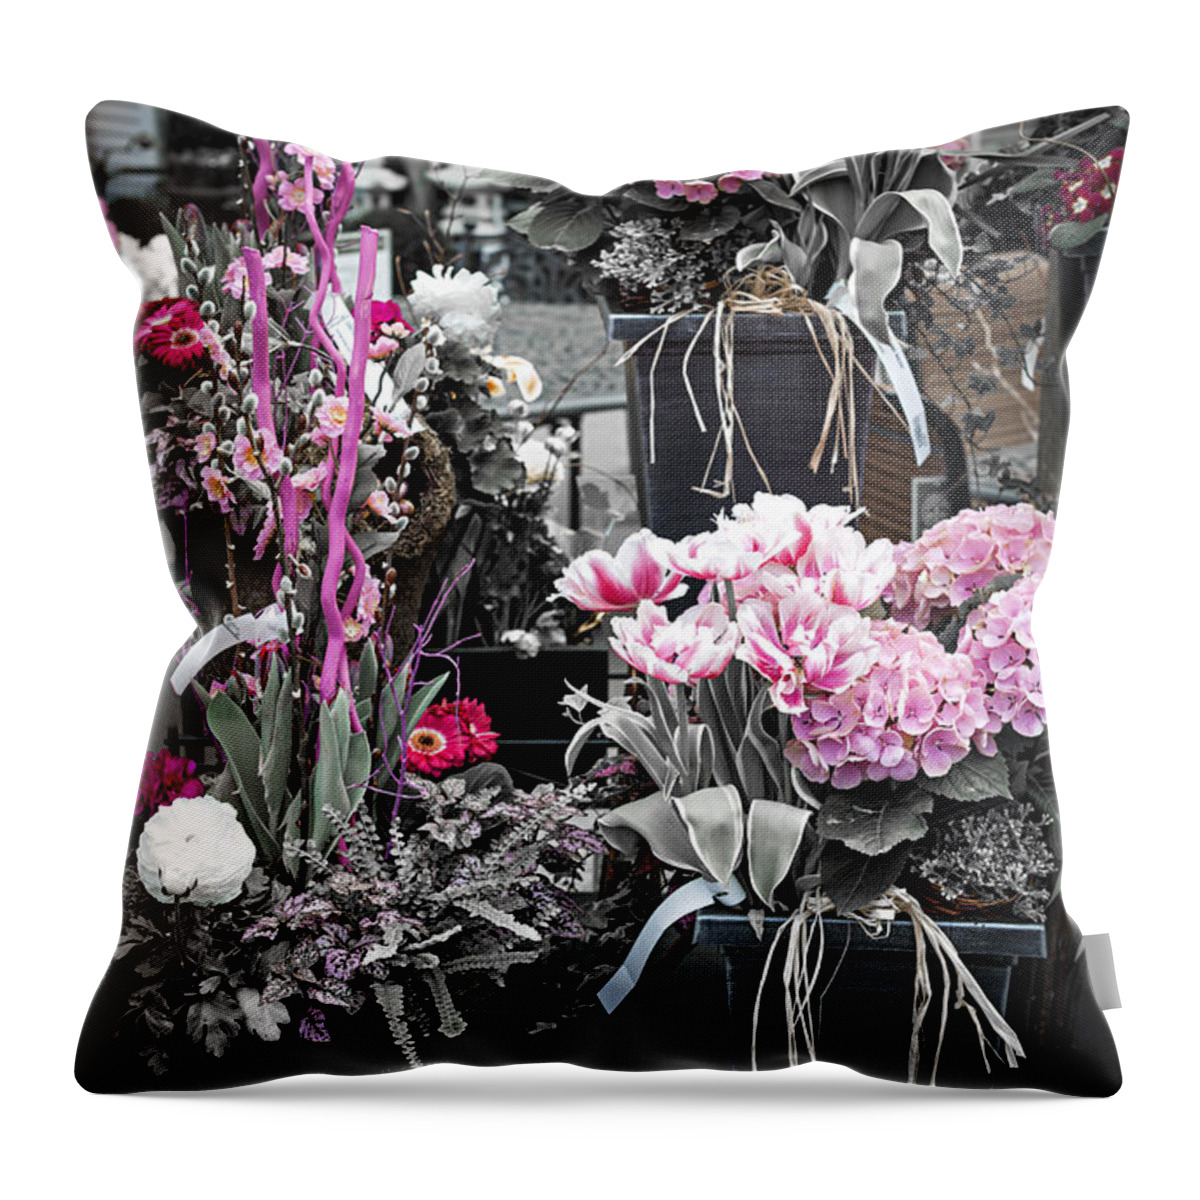 Flower Throw Pillow featuring the photograph Pink flower arrangements by Elena Elisseeva